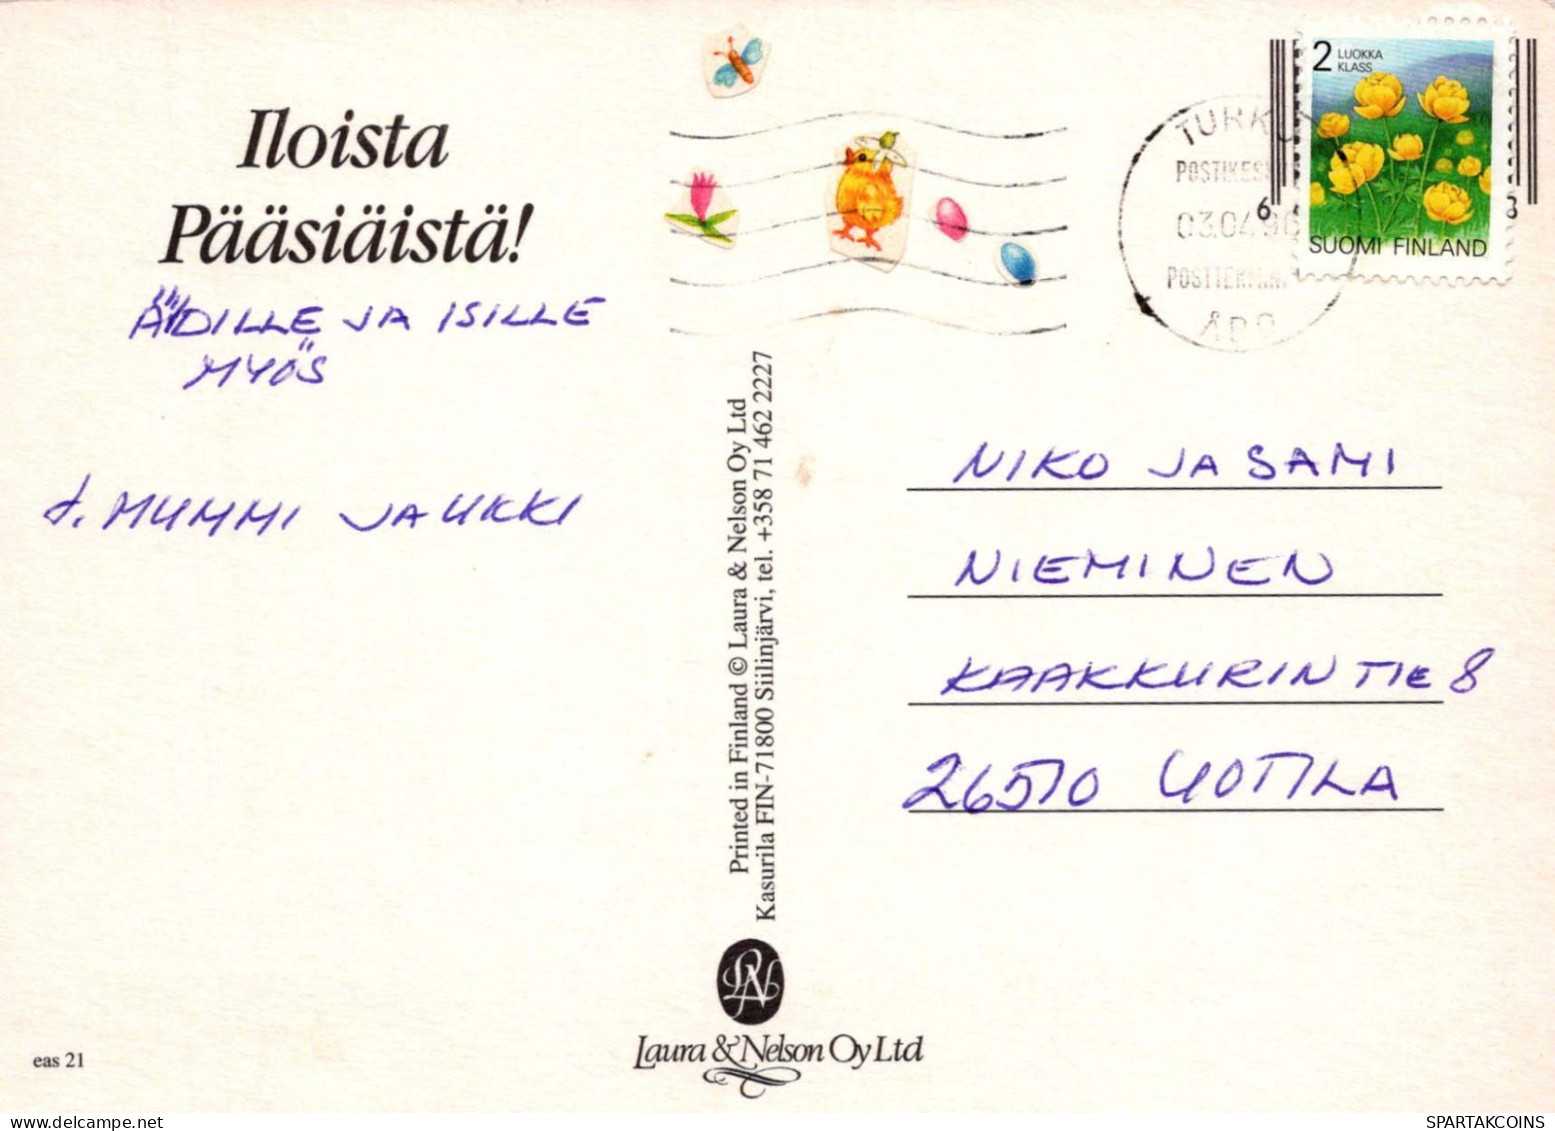 PASQUA BAMBINO UOVO Vintage Cartolina CPSM #PBO278.A - Easter